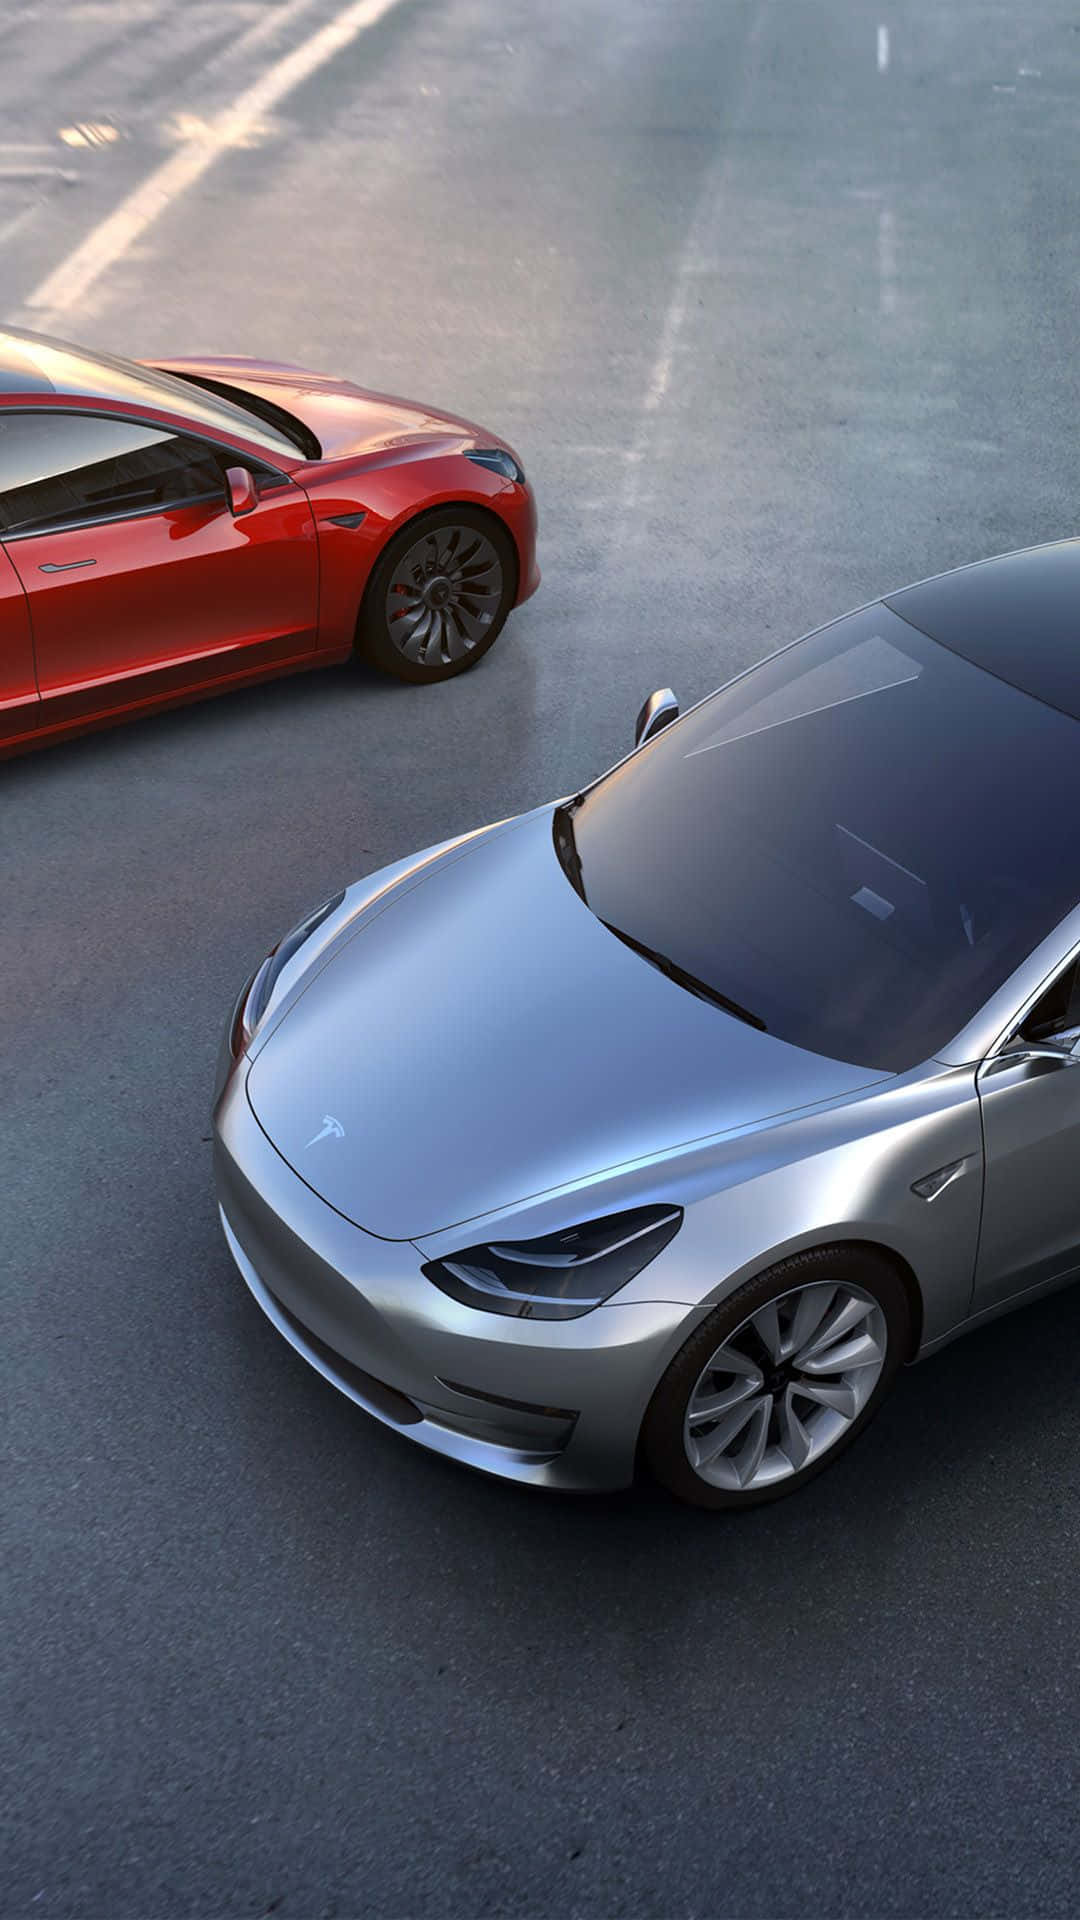 Tesla Model Cars iPhone Wallpaper